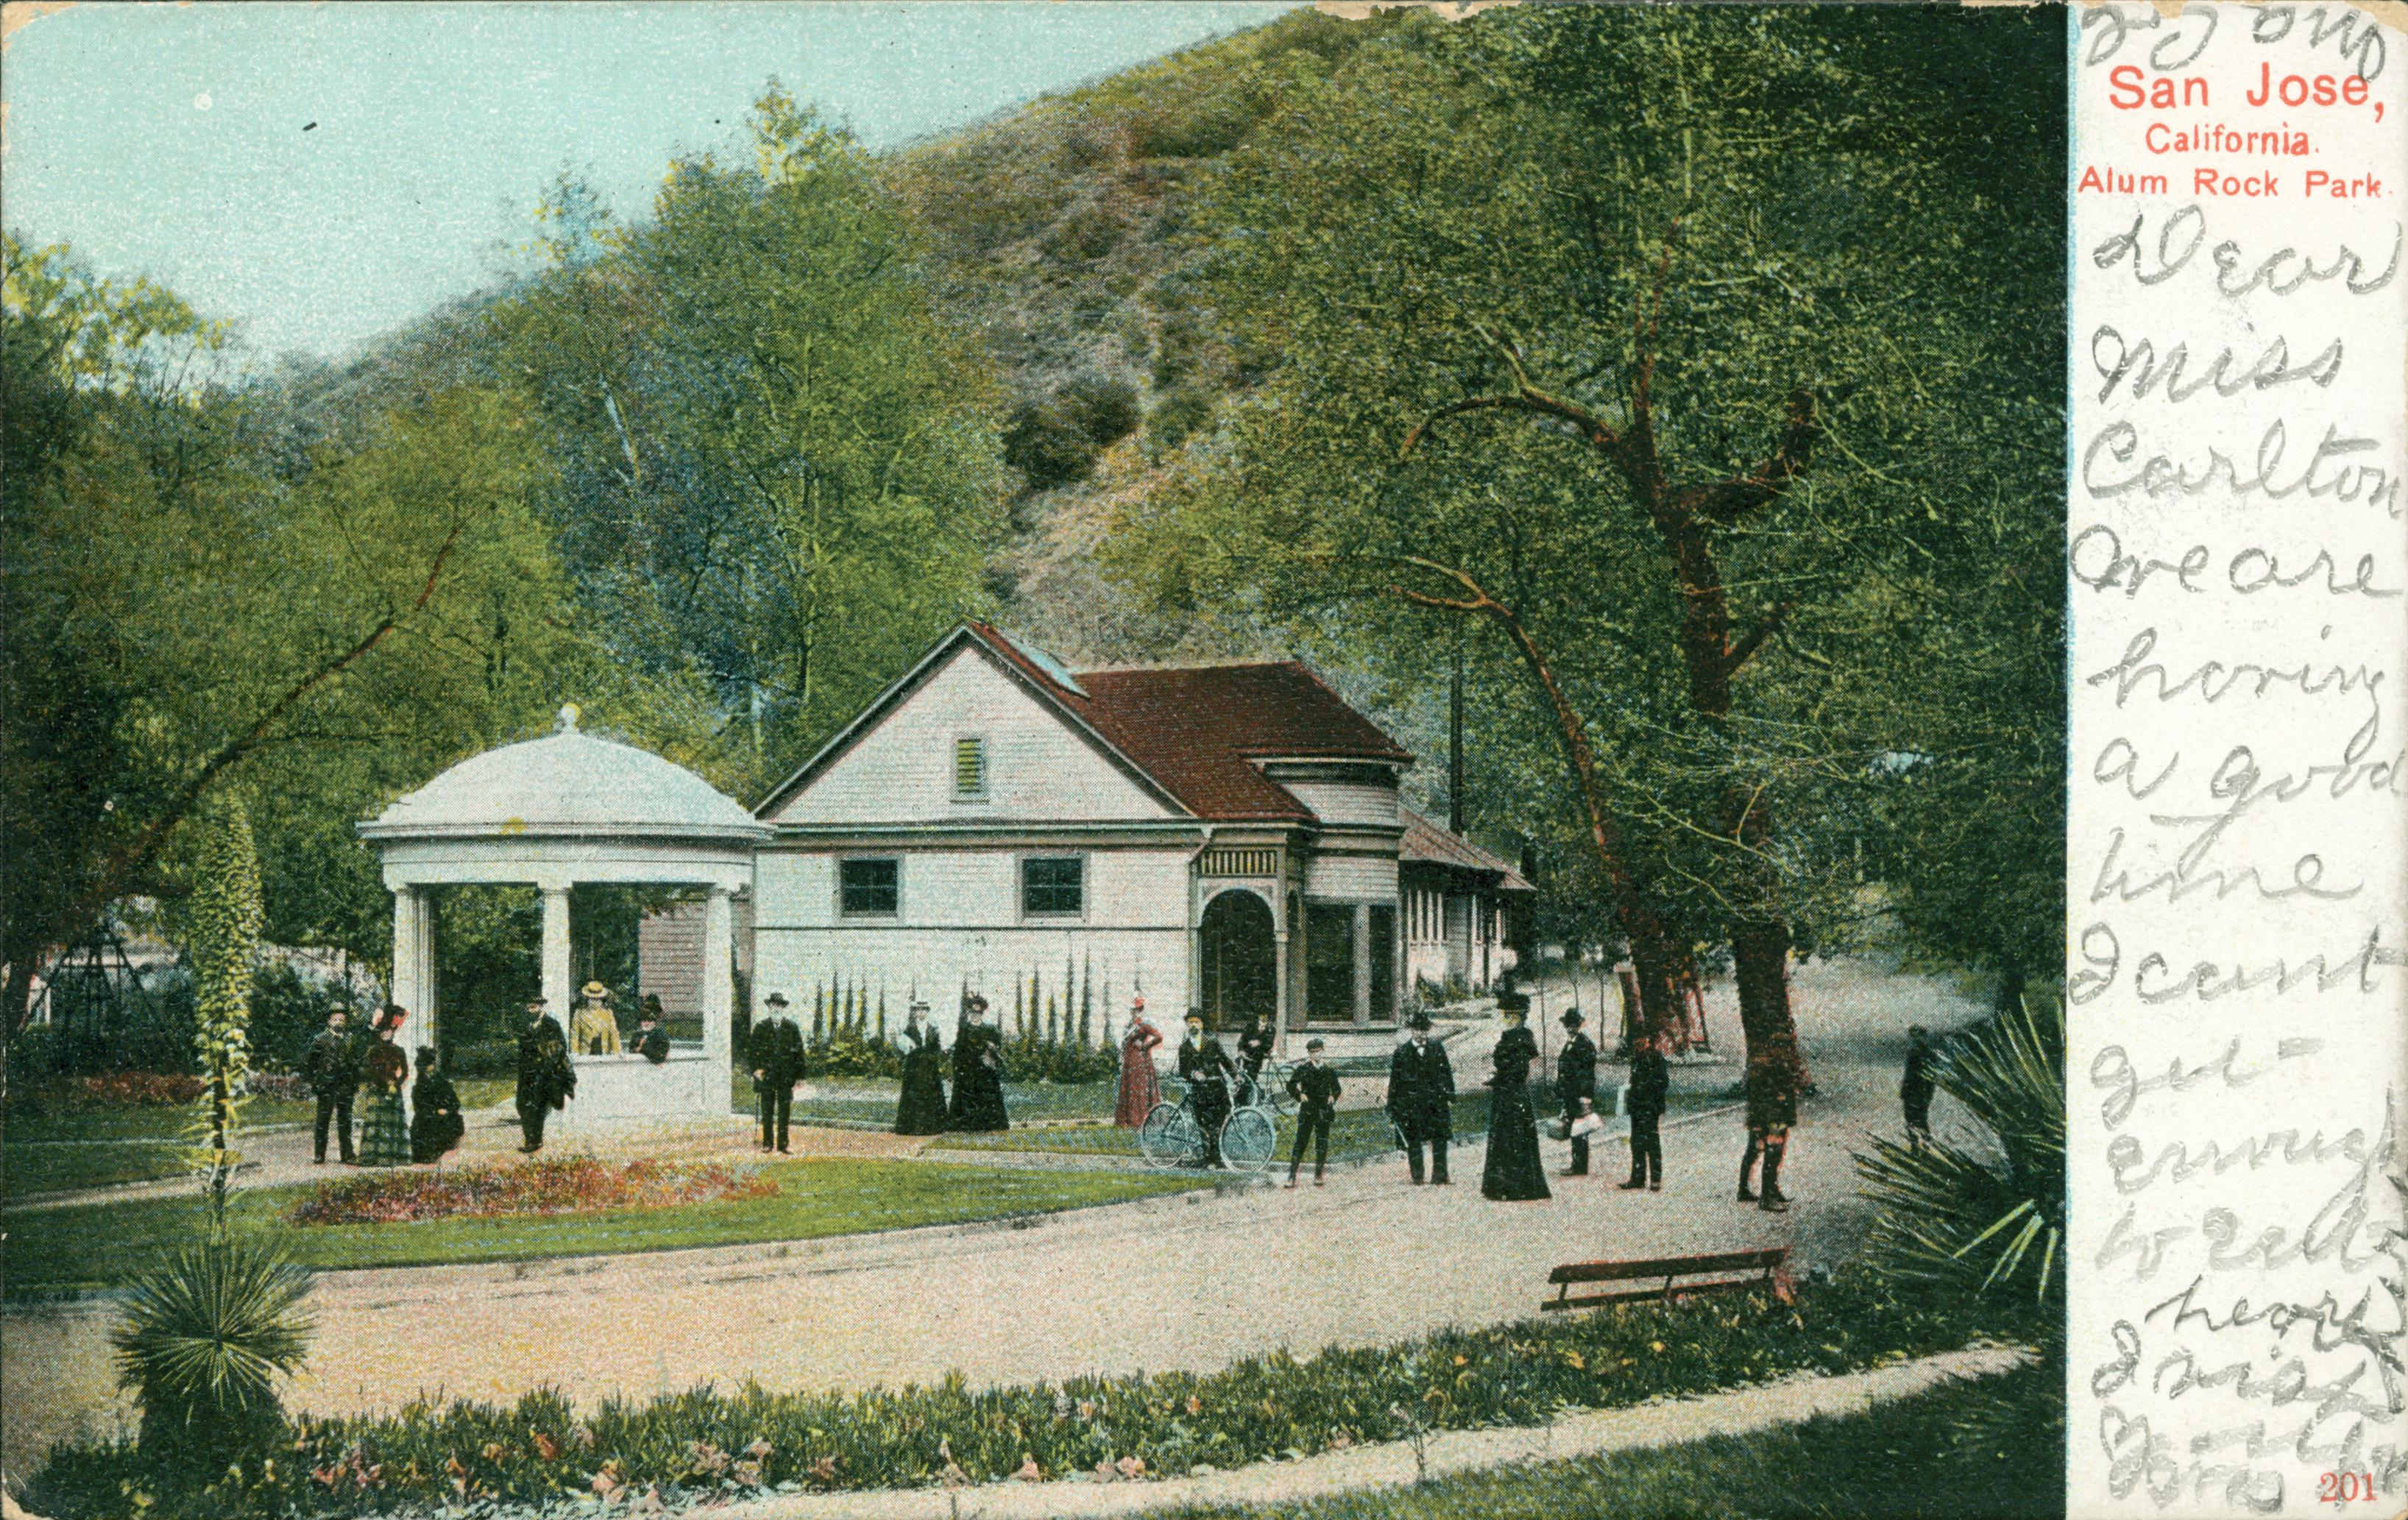 Color park scene of Alum Rock Park in San Jose, CA., gazebo and building, hills in background